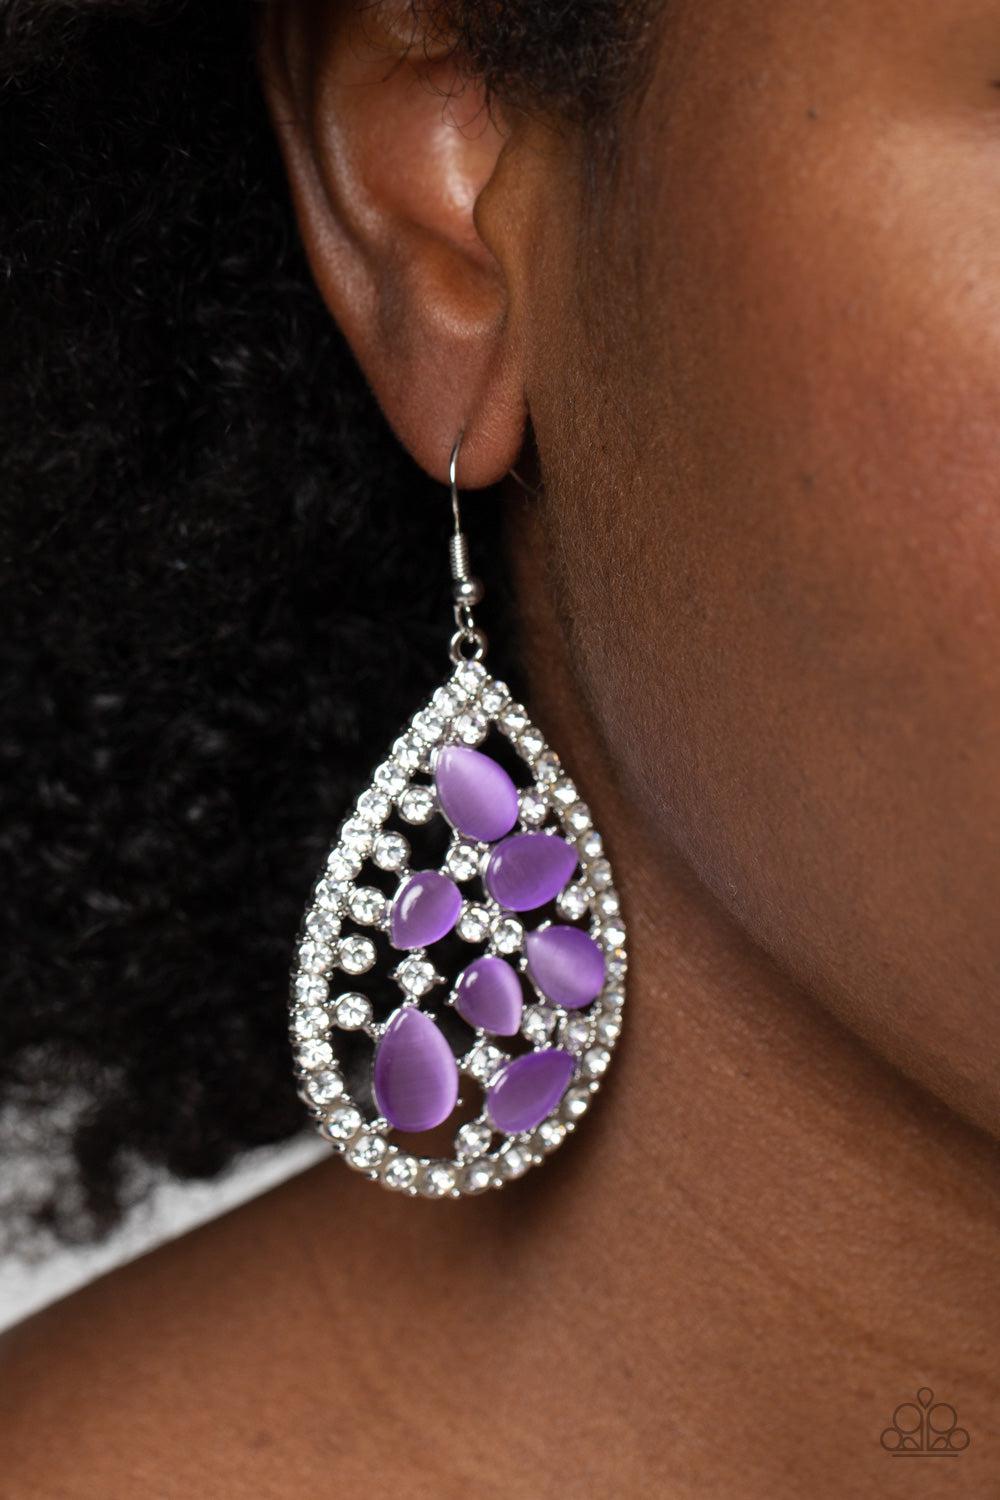 Cats Eye Class Purple Earrings - Paparazzi Accessories-on model - CarasShop.com - $5 Jewelry by Cara Jewels